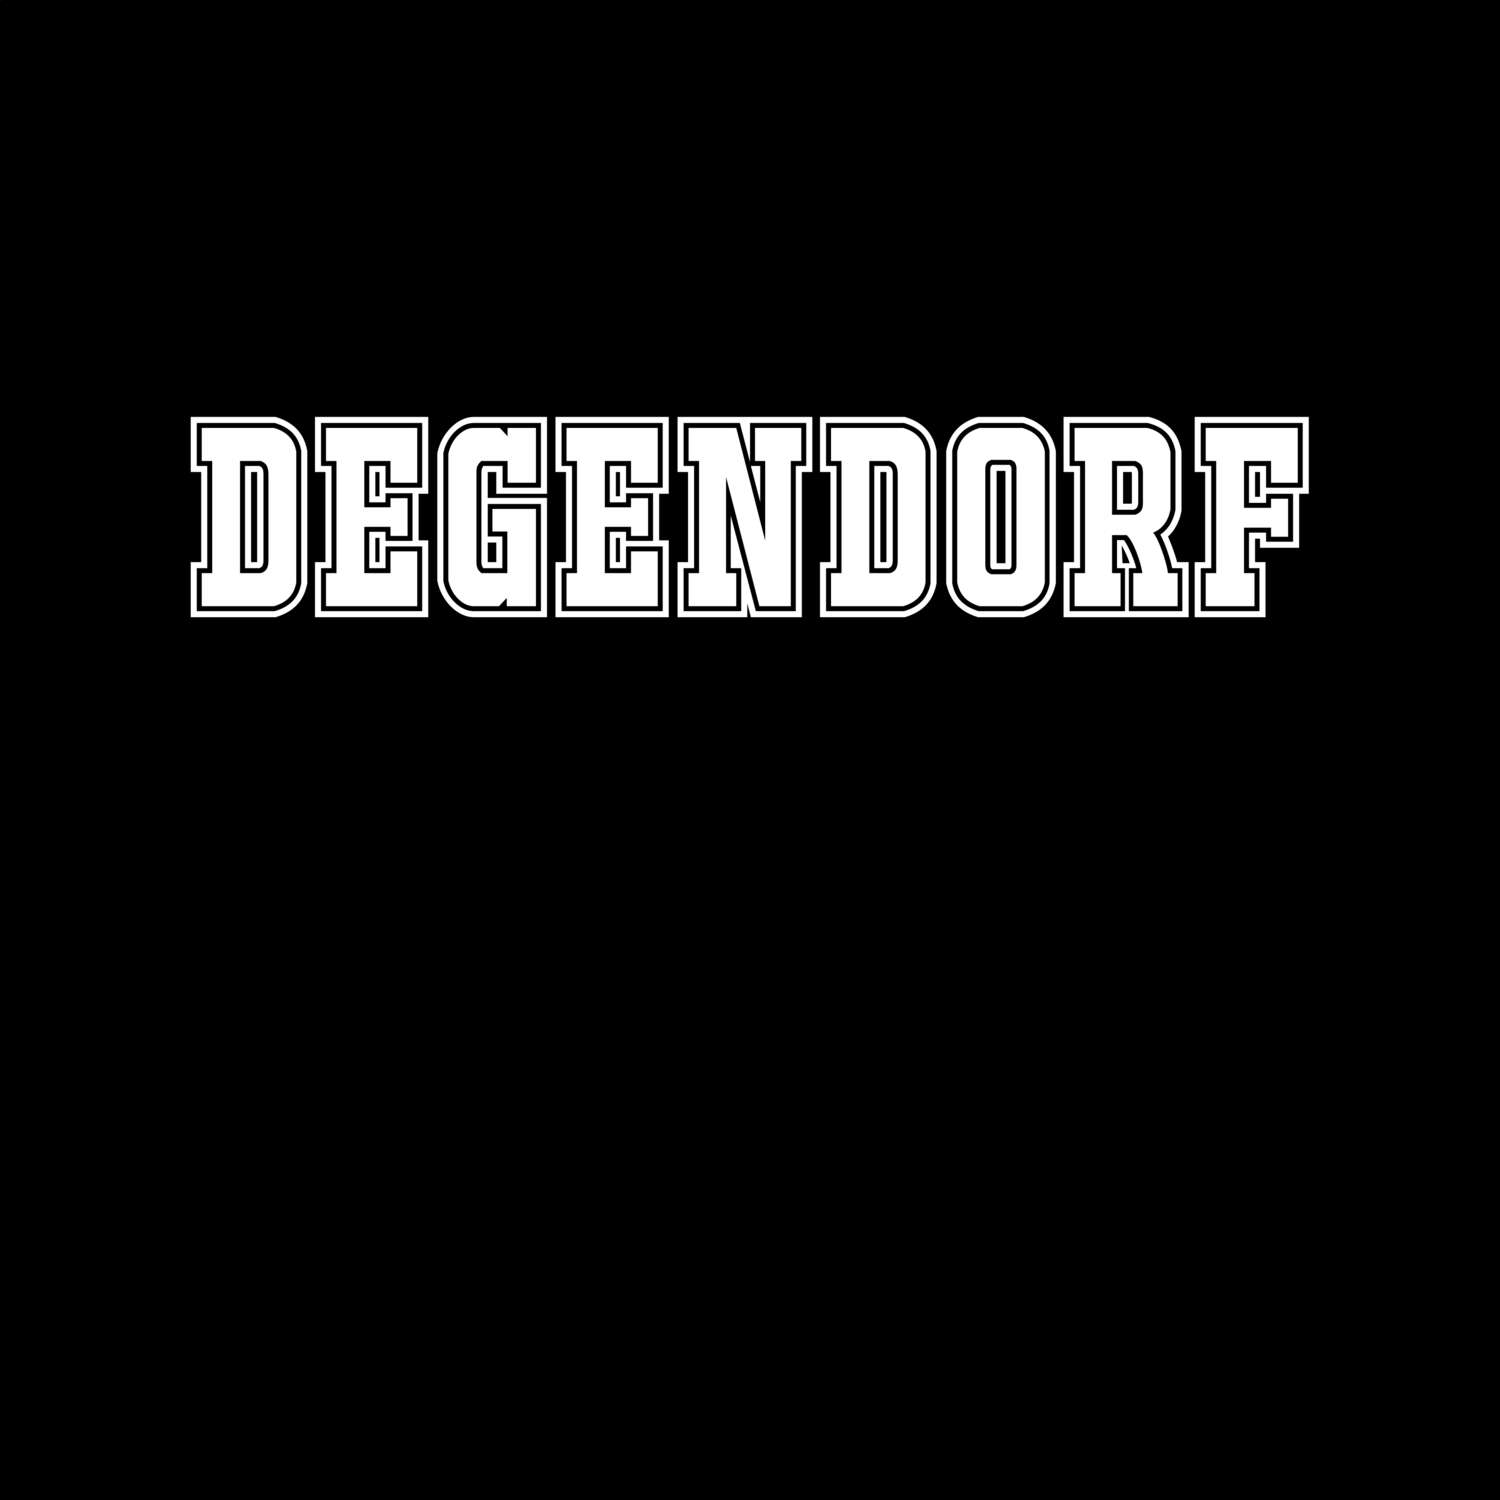 Degendorf T-Shirt »Classic«